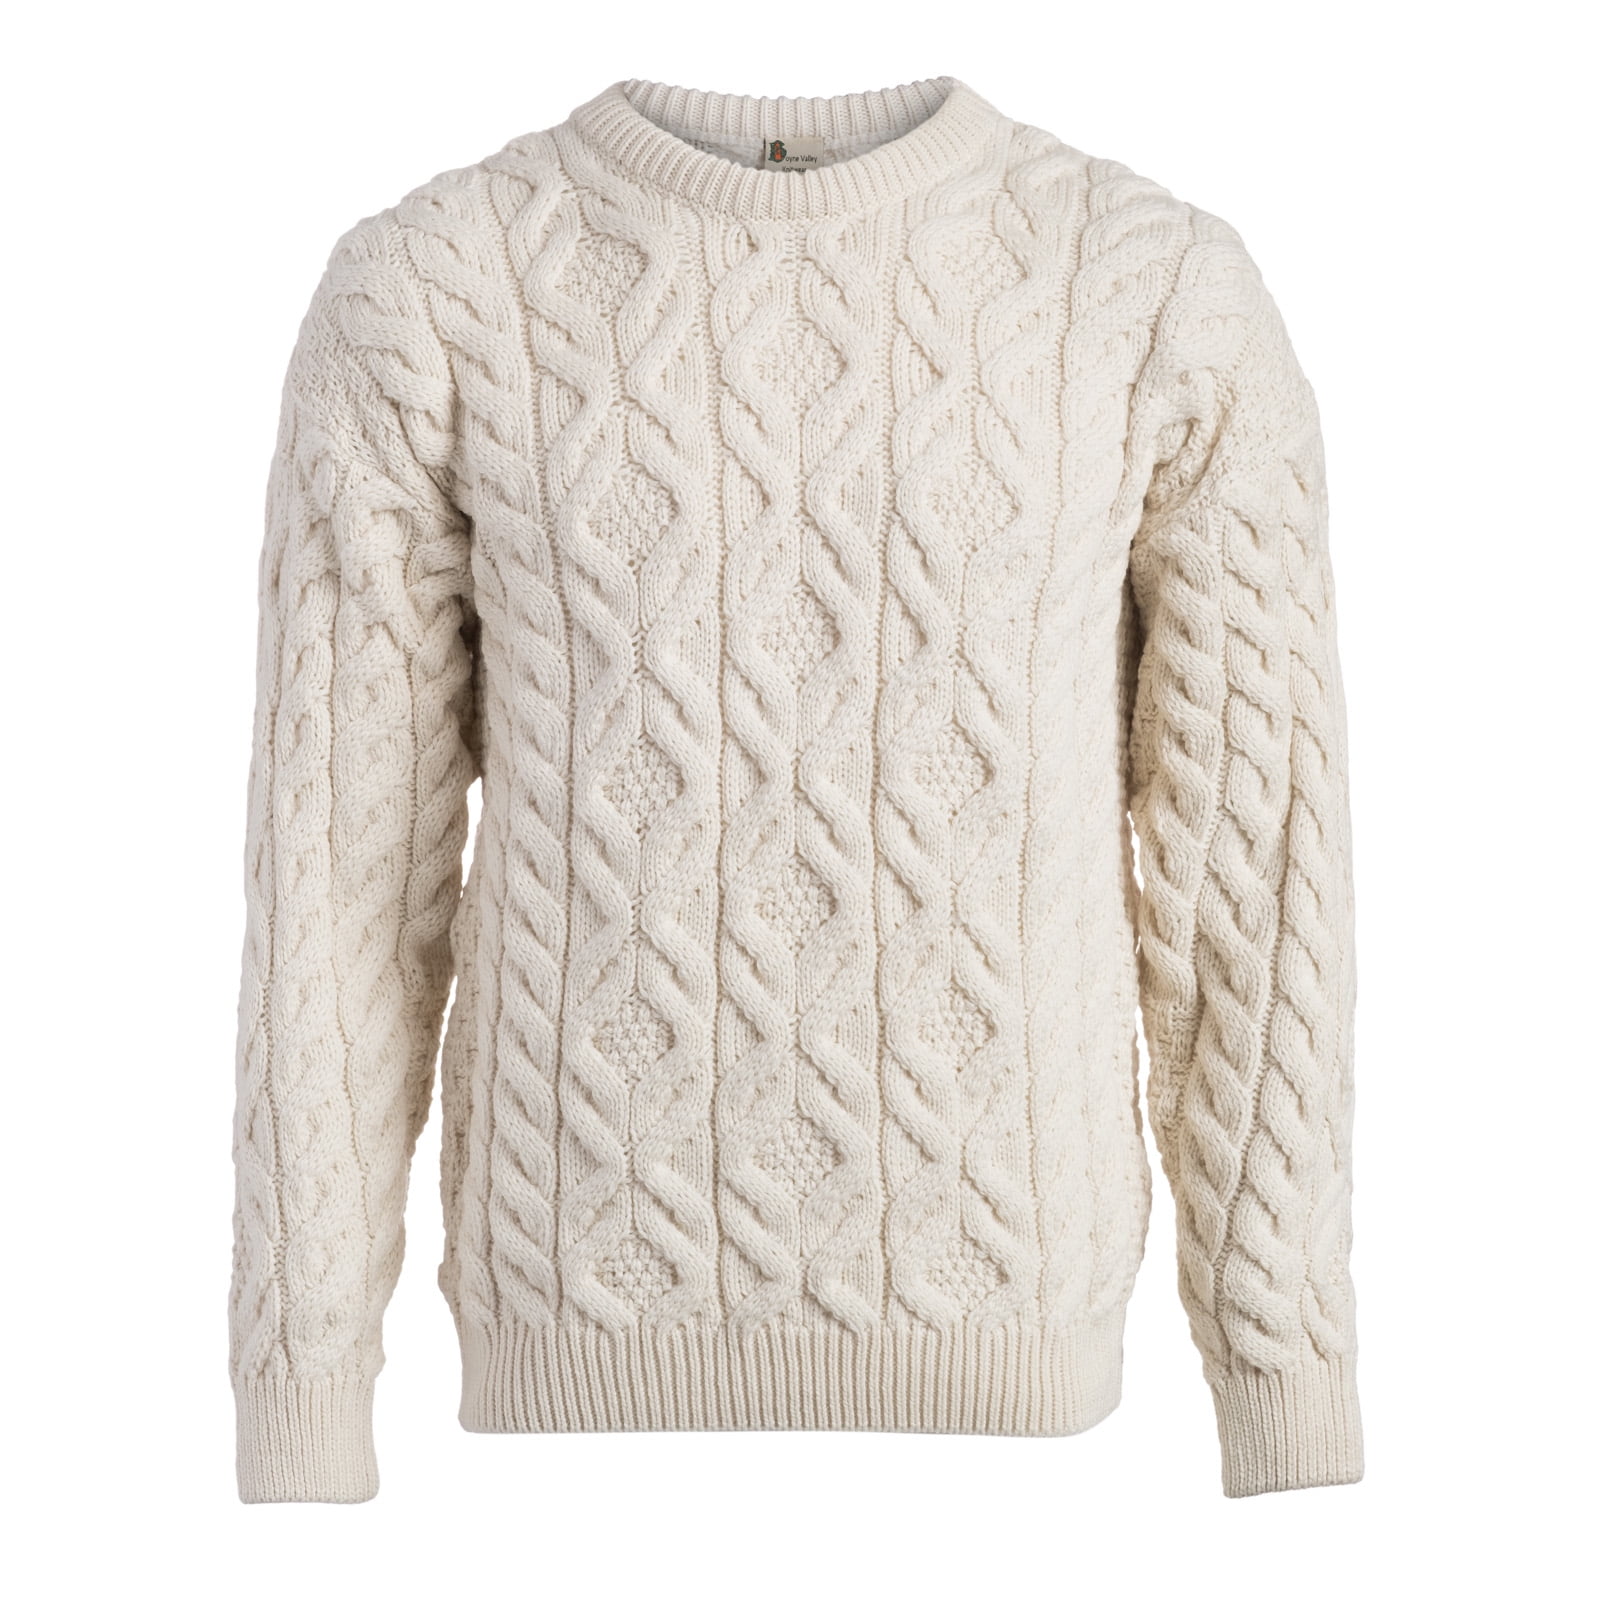 Boyne Valley Knitwear Men's Cable Knit Irish Sweater Supersoft Merino ...